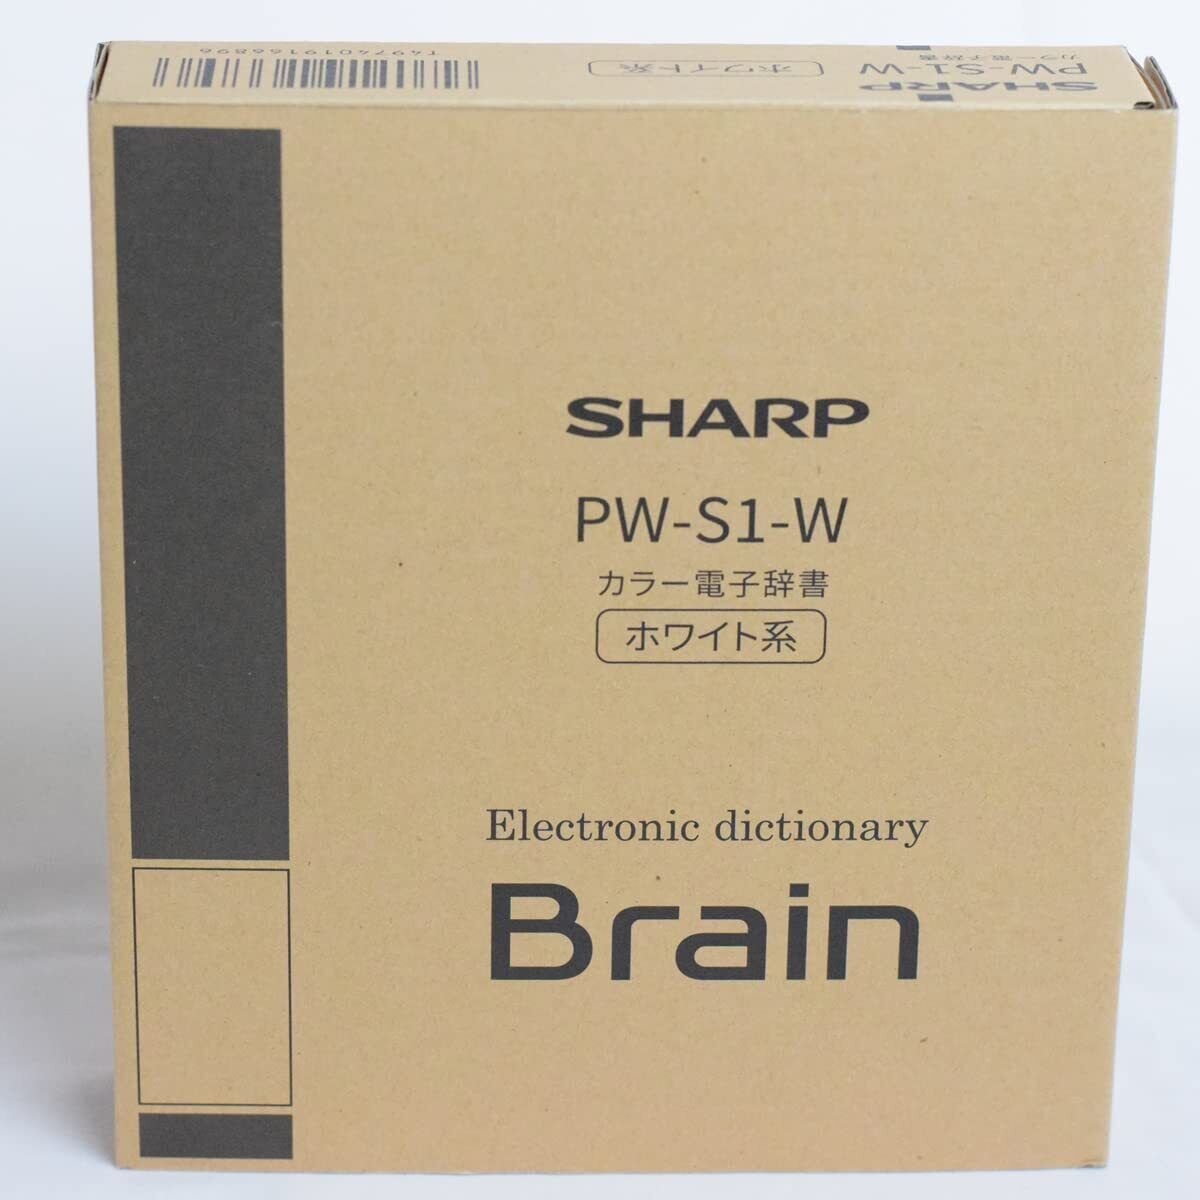 Sharp PW-S1-W Color Electronic Dictionary Brain Enhanced English High School